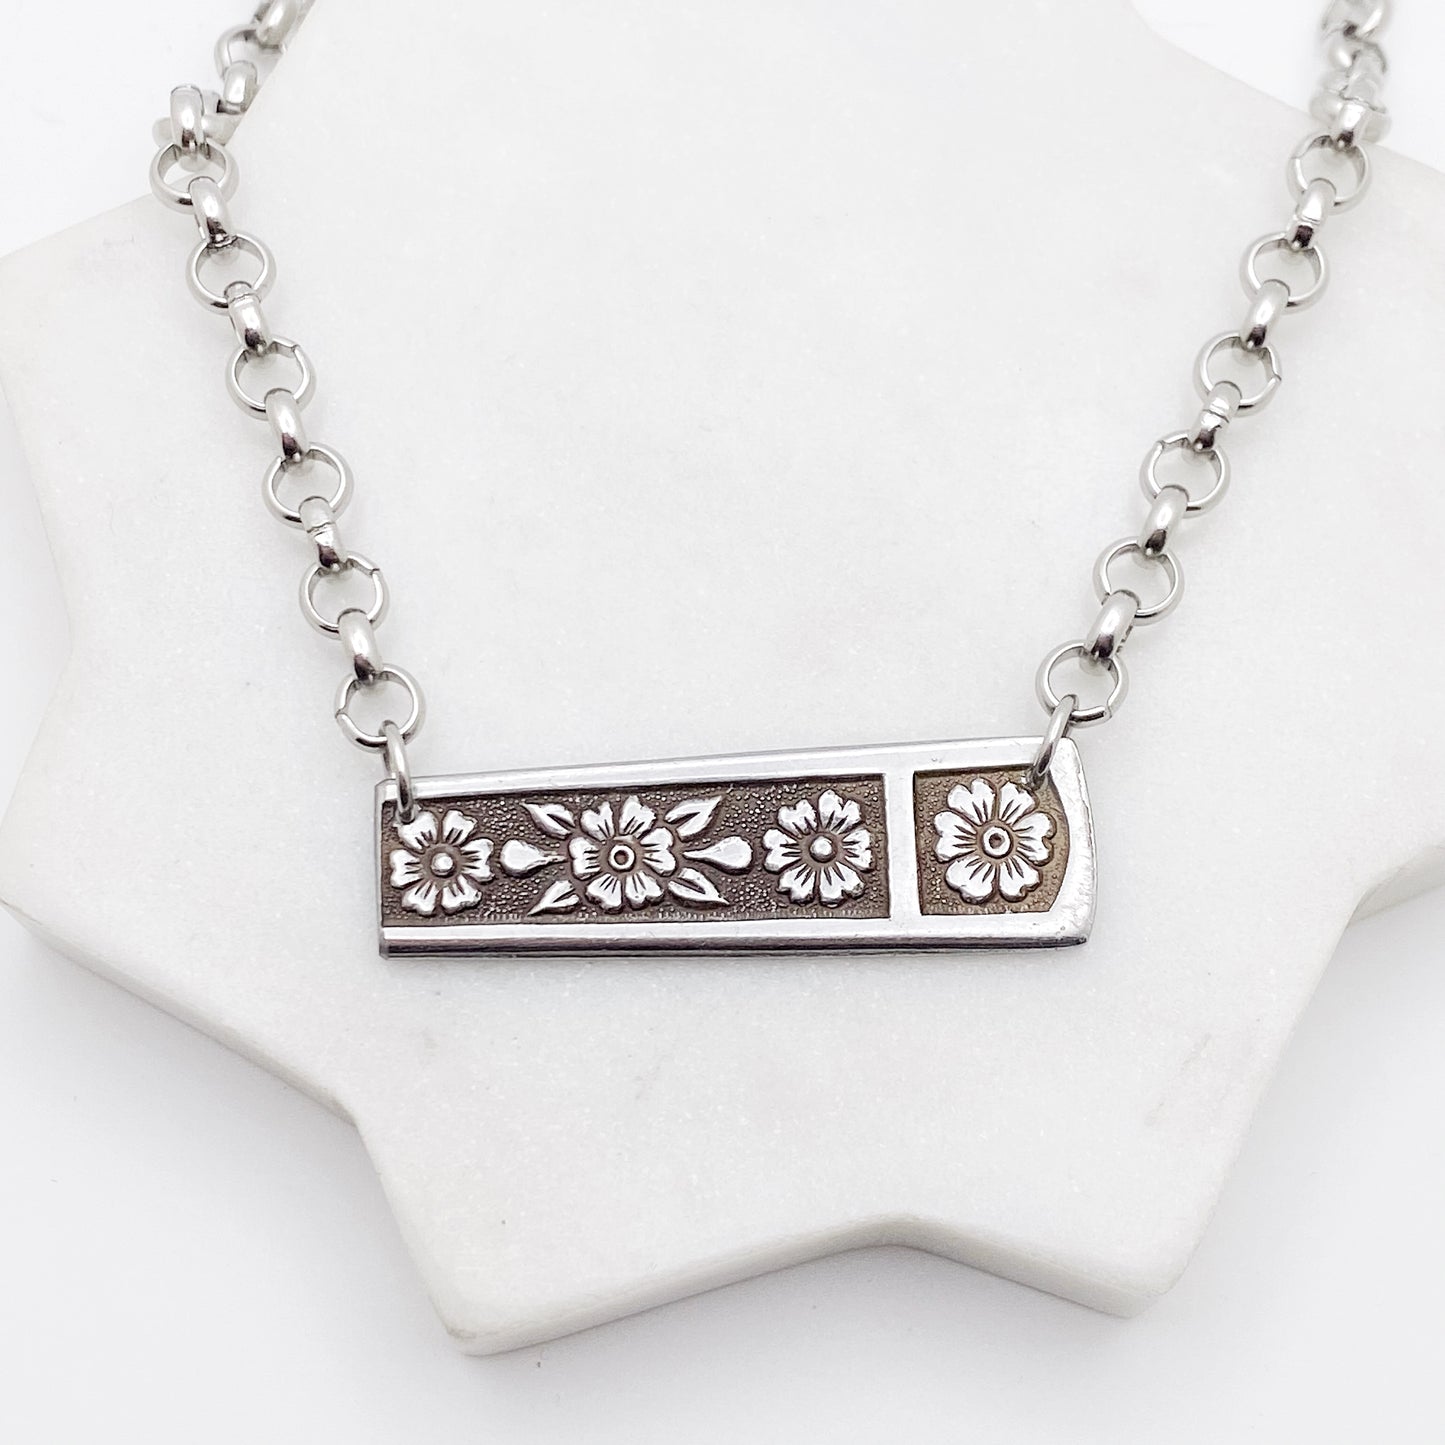 Serta, Spoon Handle Bar Necklace, Reclaimed Silverware Necklace, Vintage Spoon Necklace Necklaces callistafaye   